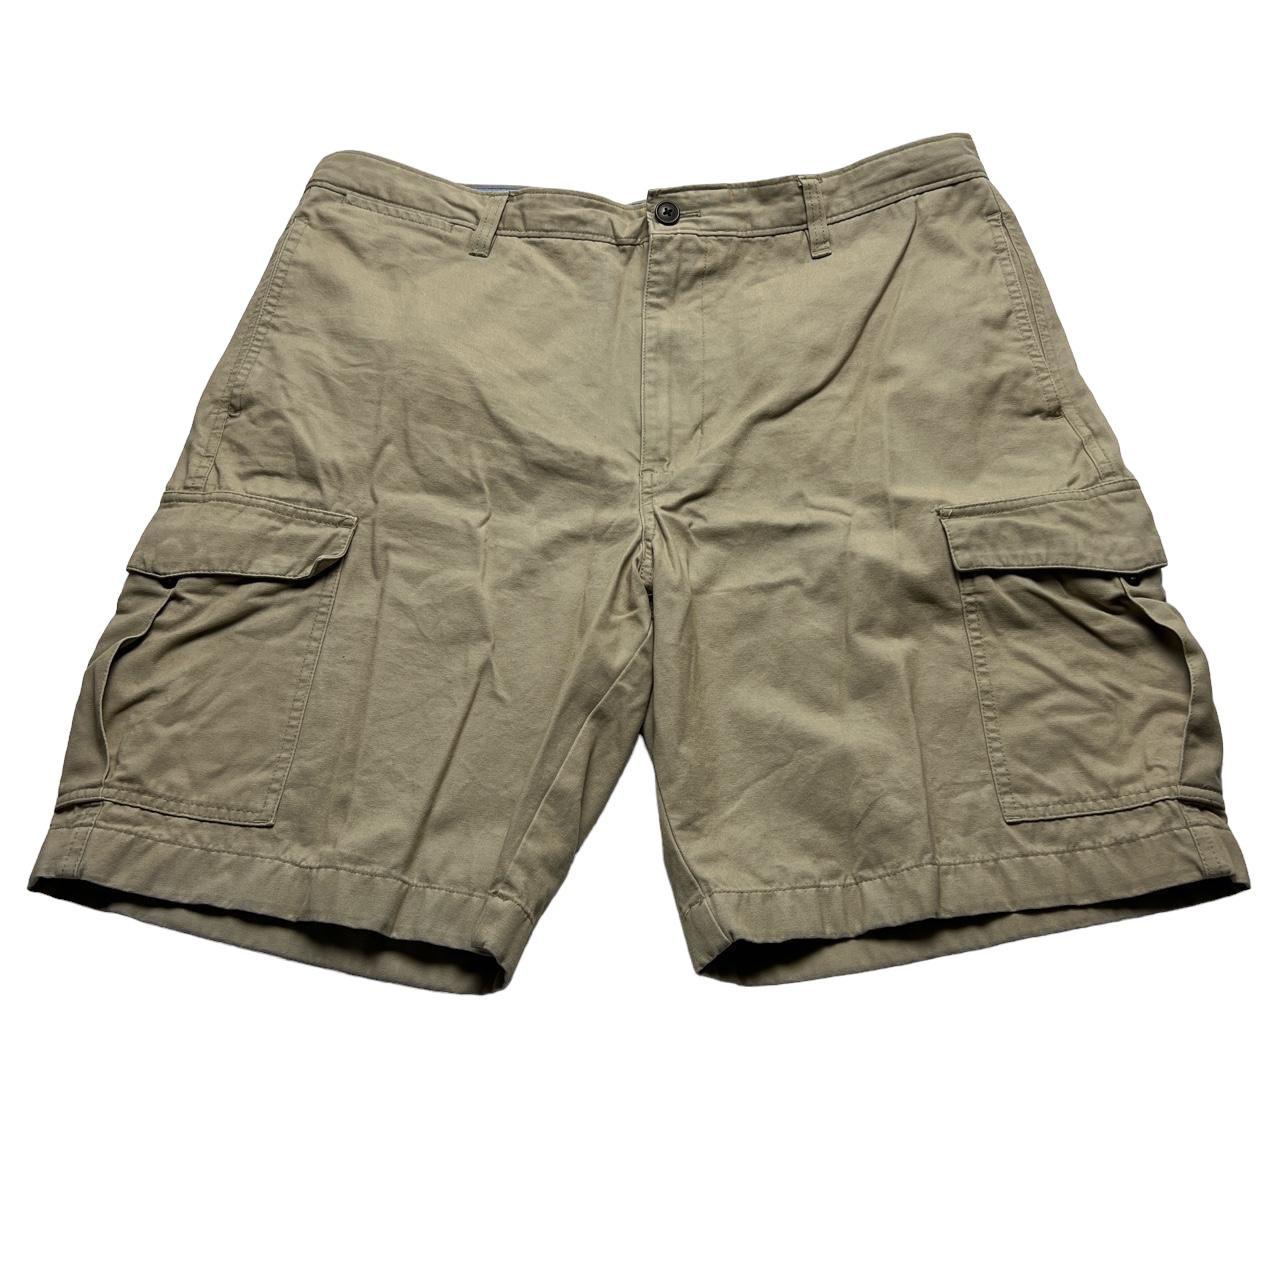 Chaps Men's Tan and Khaki Shorts | Depop